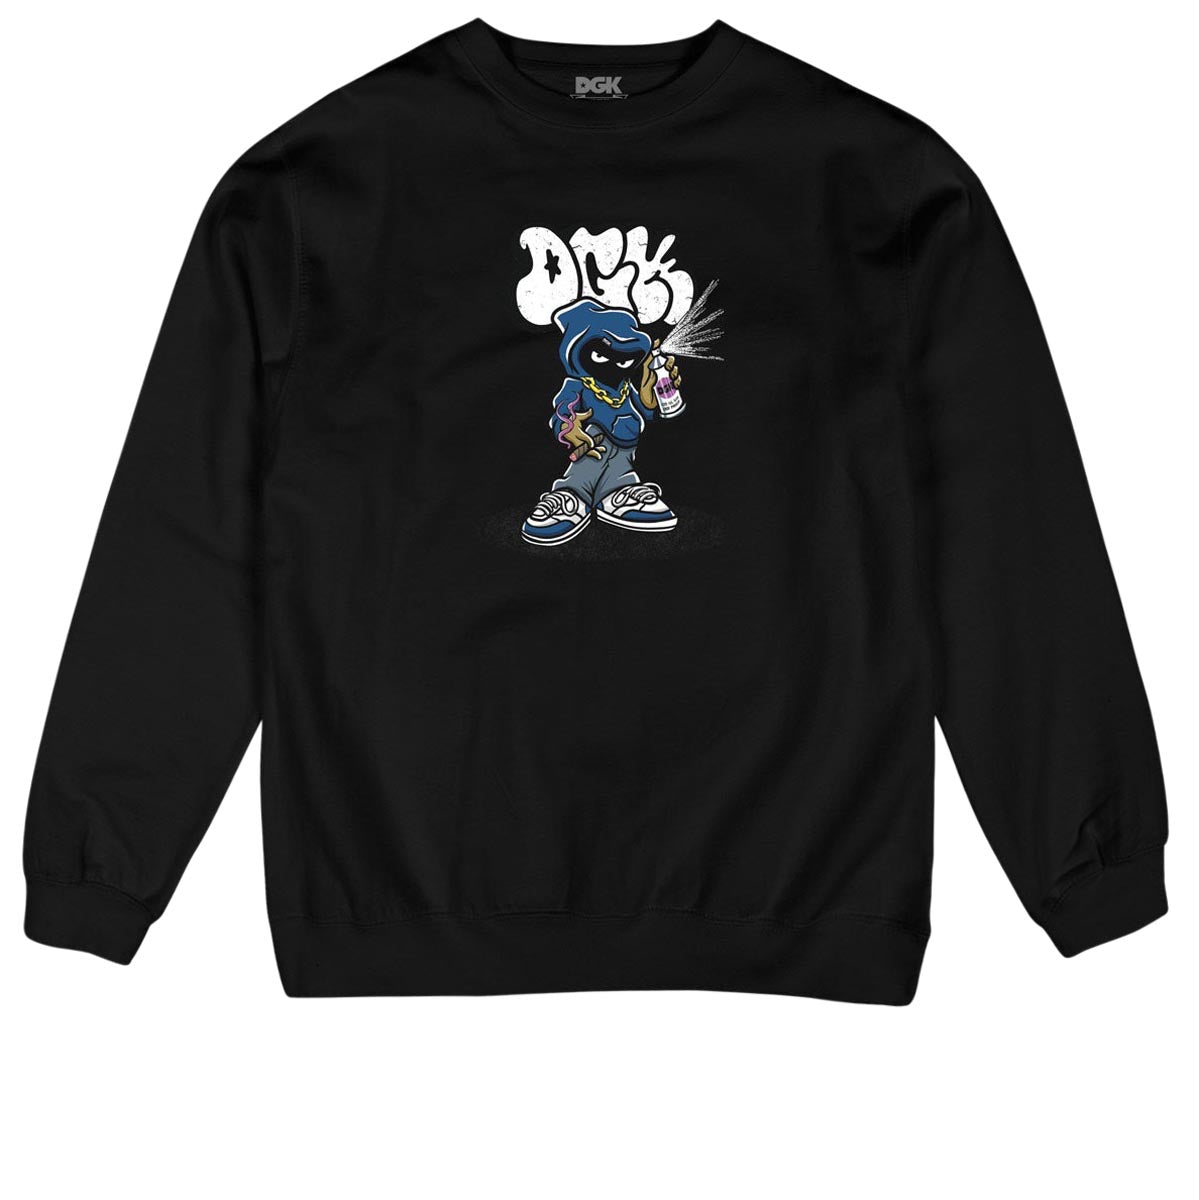 DGK Menace Crewneck Sweatshirt - Black image 1